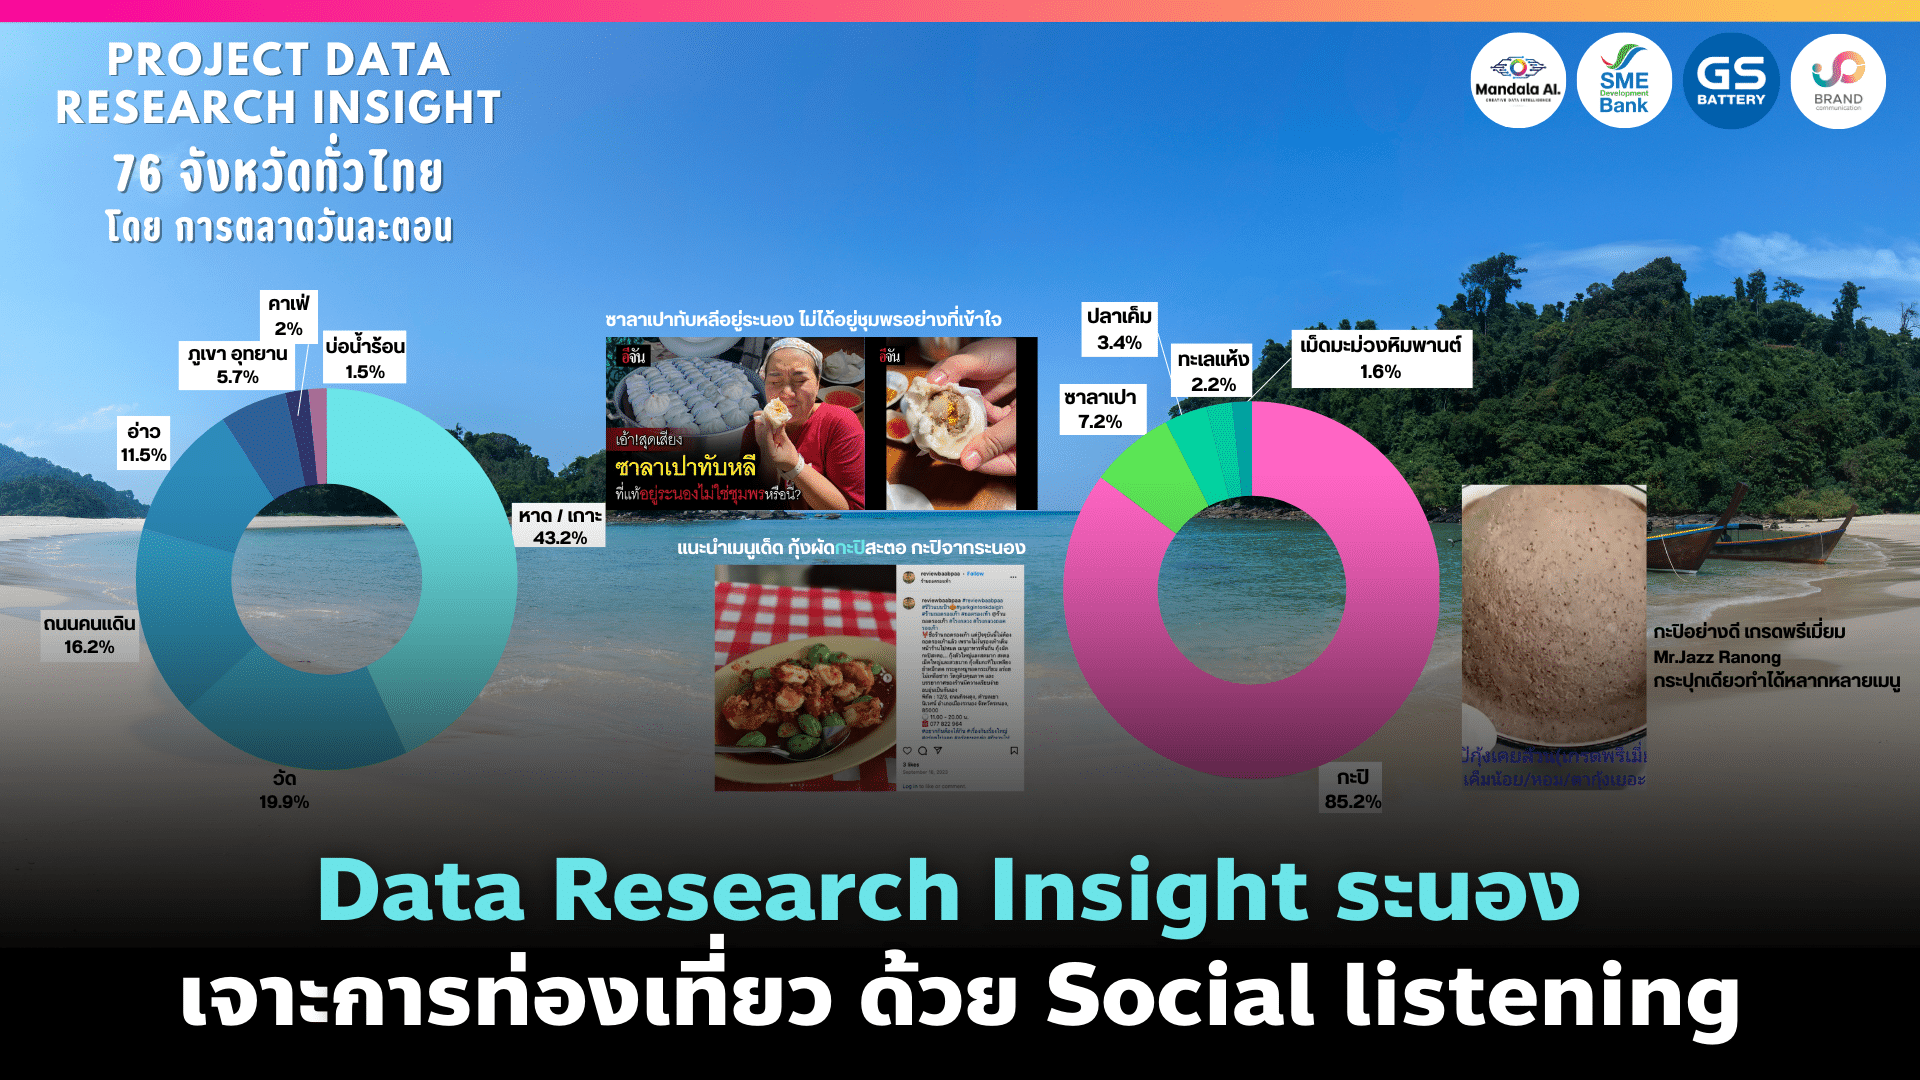 Data Research Insight ระนอง เจาะการท่องเที่ยวด้วย Social listening